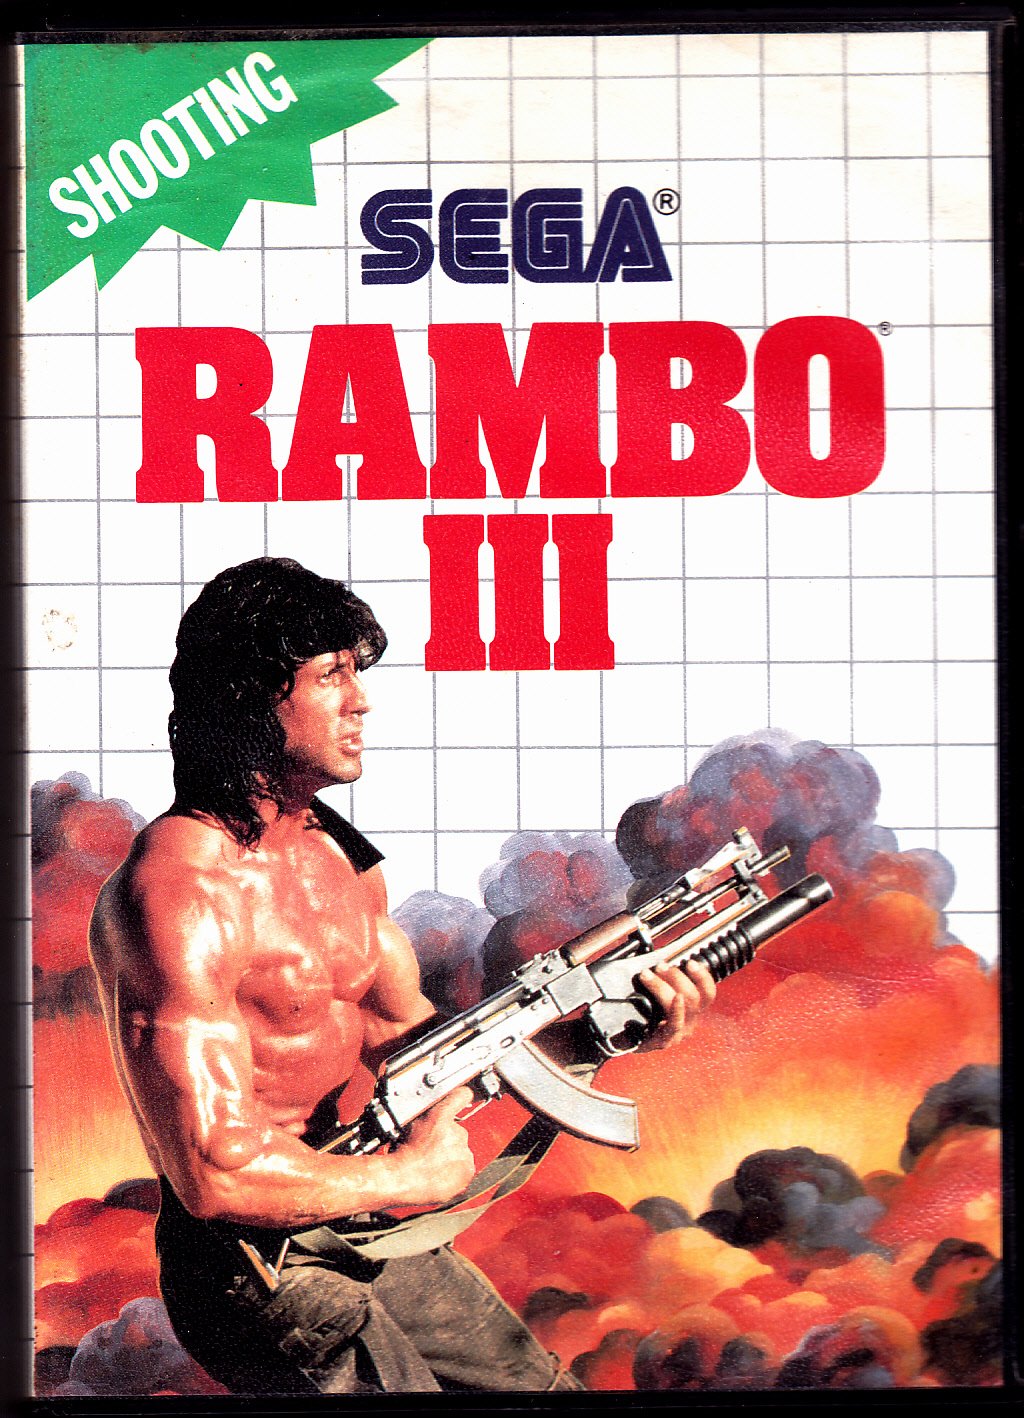 Rambo III - Sega Master System 1988 Video Game - Complete - Very Good